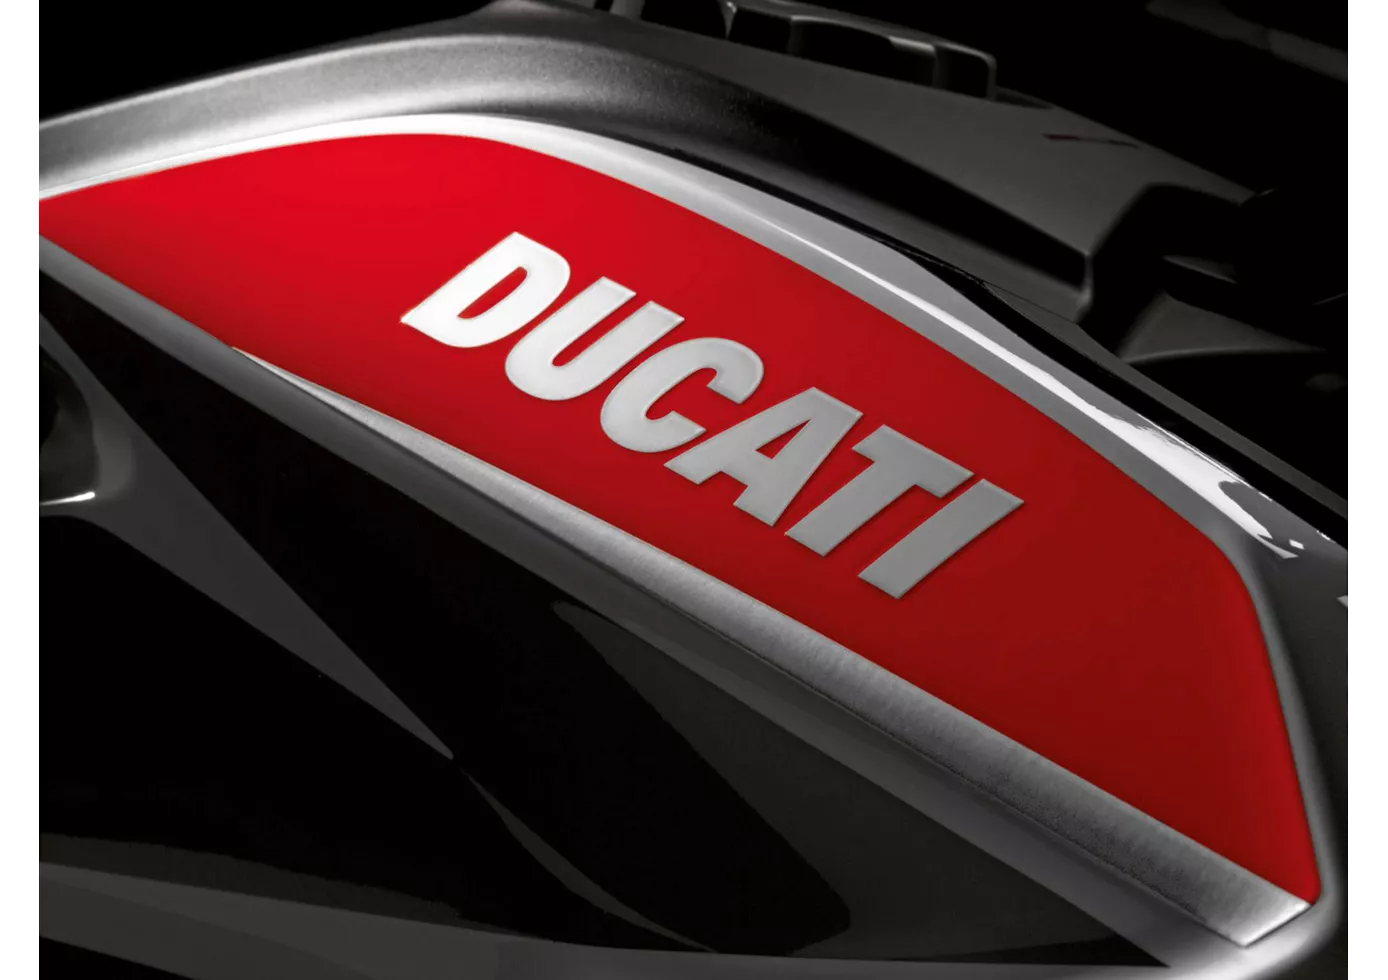 Ducati Hypermotard SP 821 2013